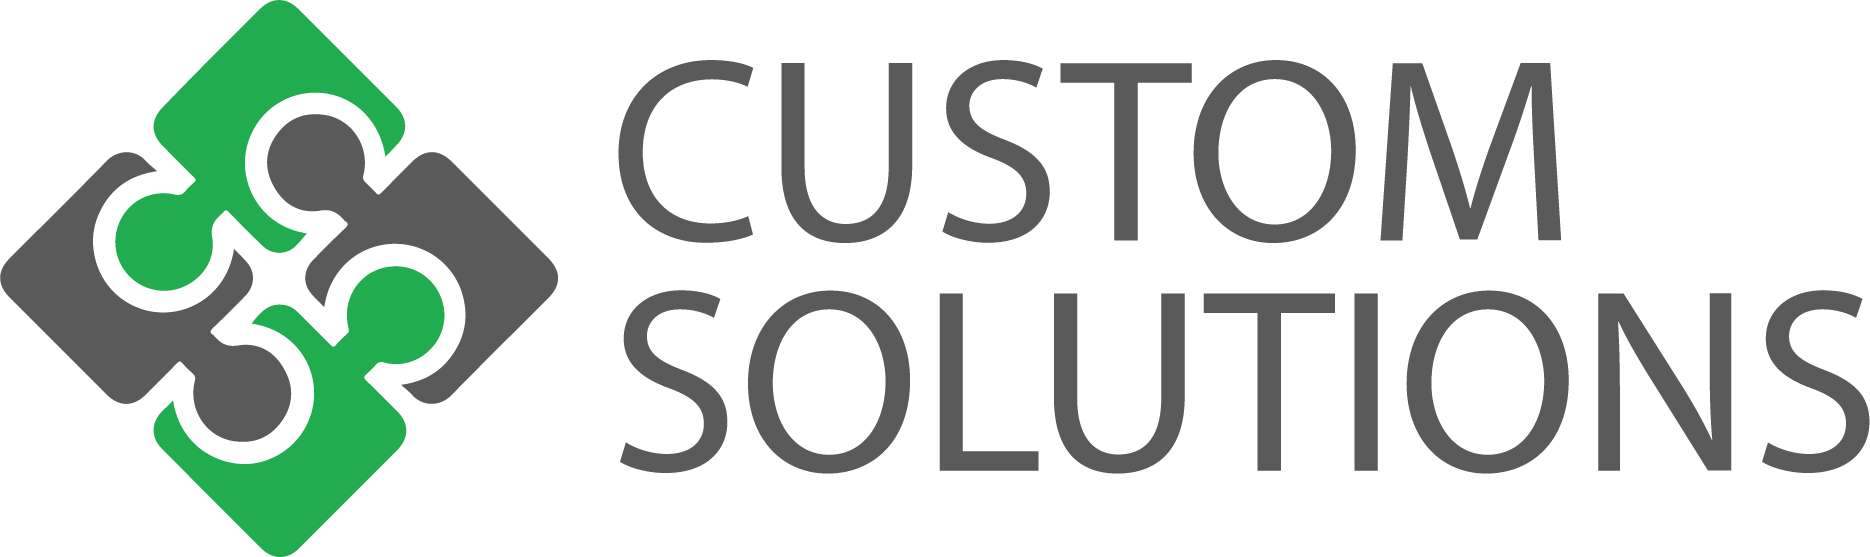 CustomSolutions_logo.png